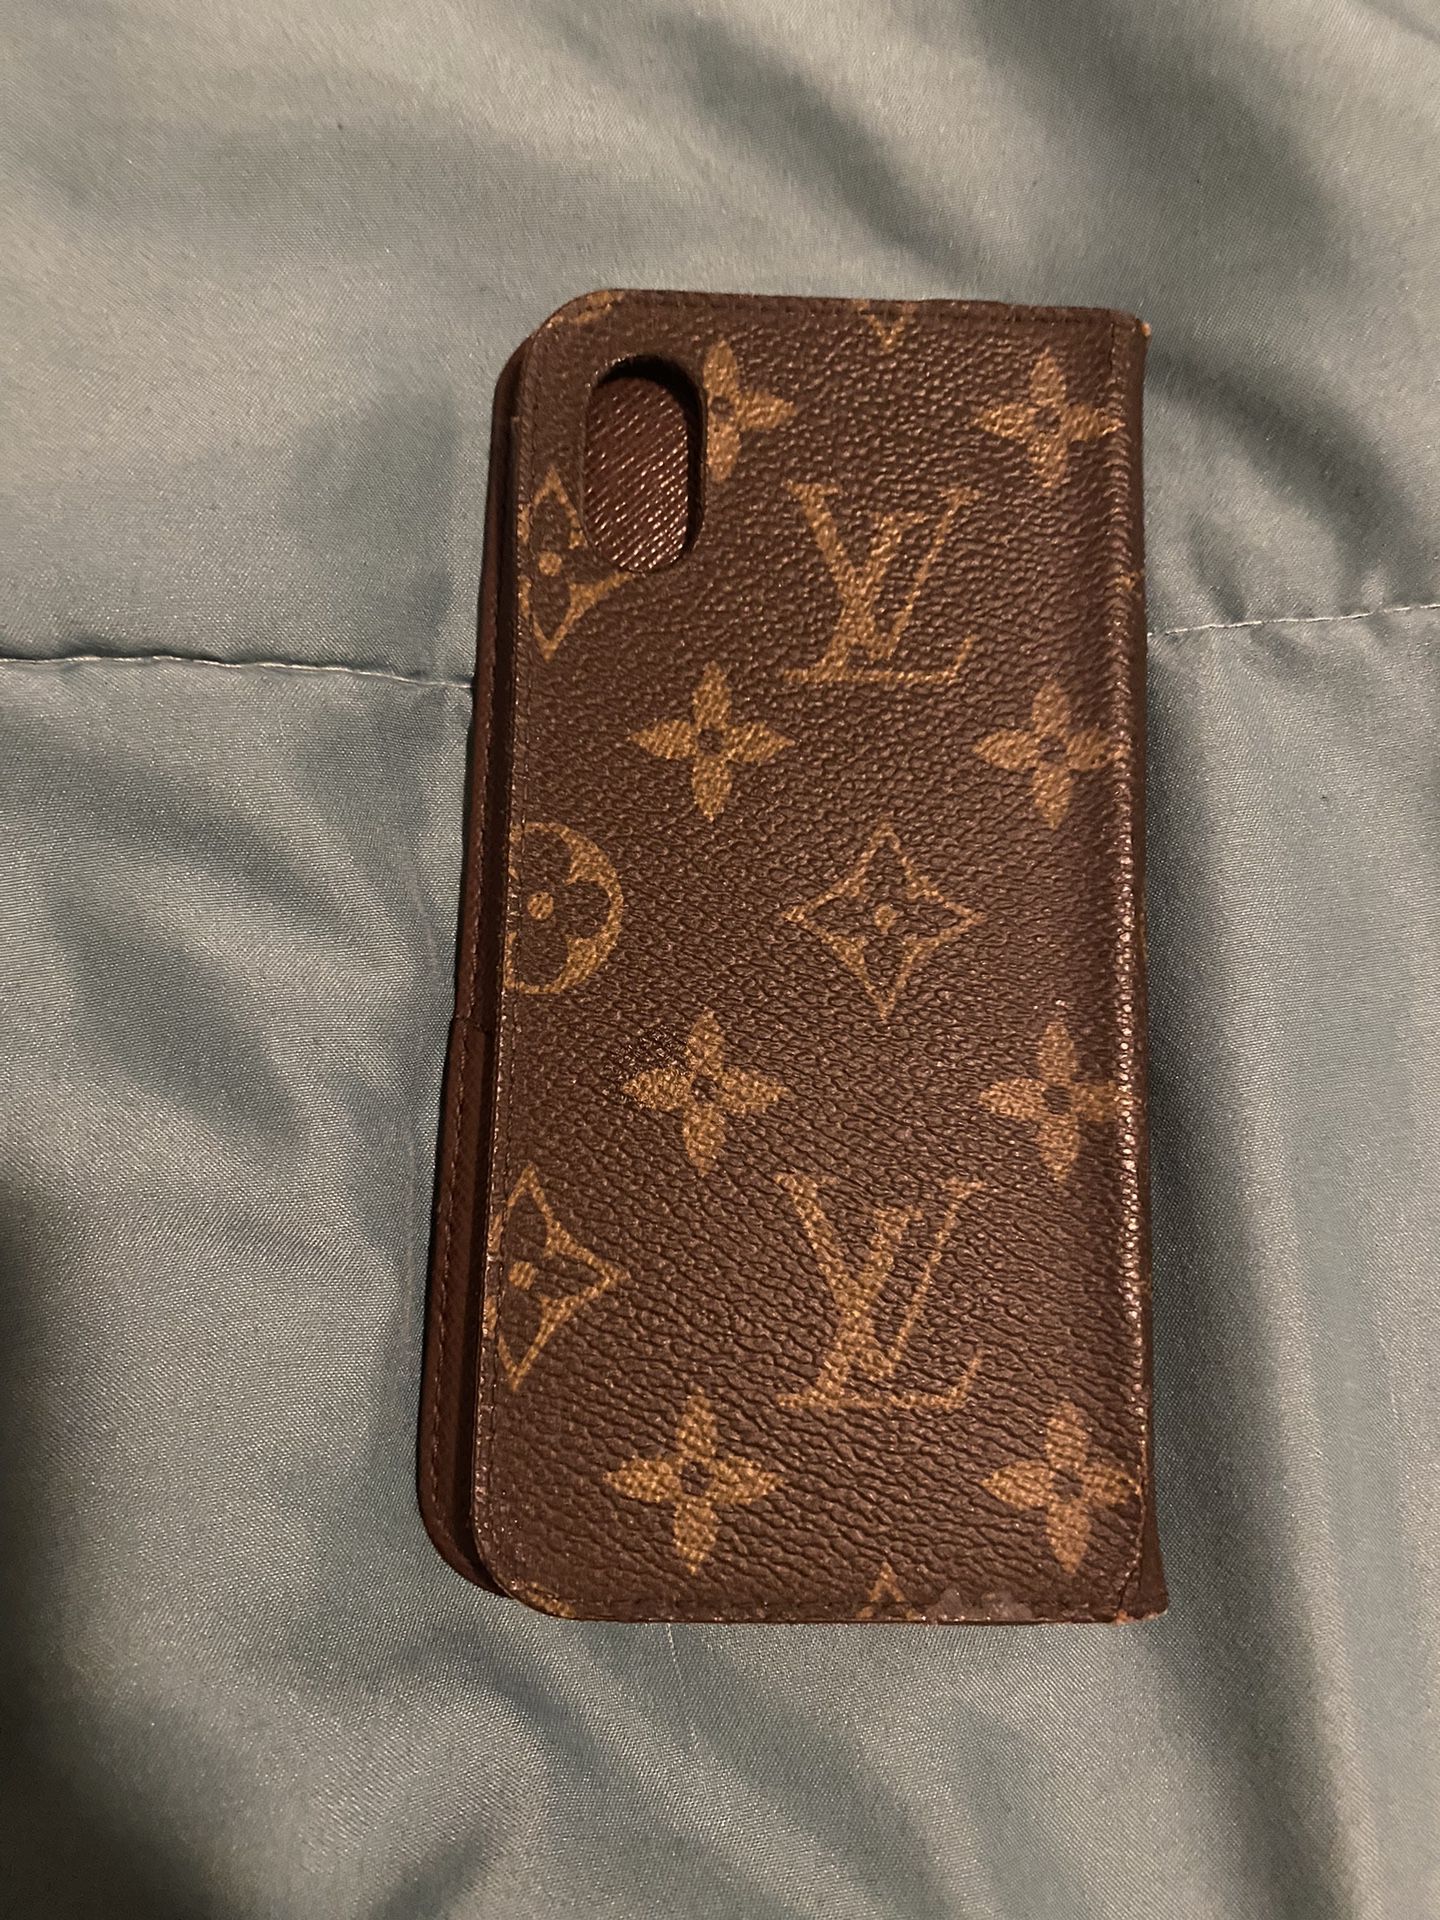 Louis Vuitton iPhone X Phone Case 